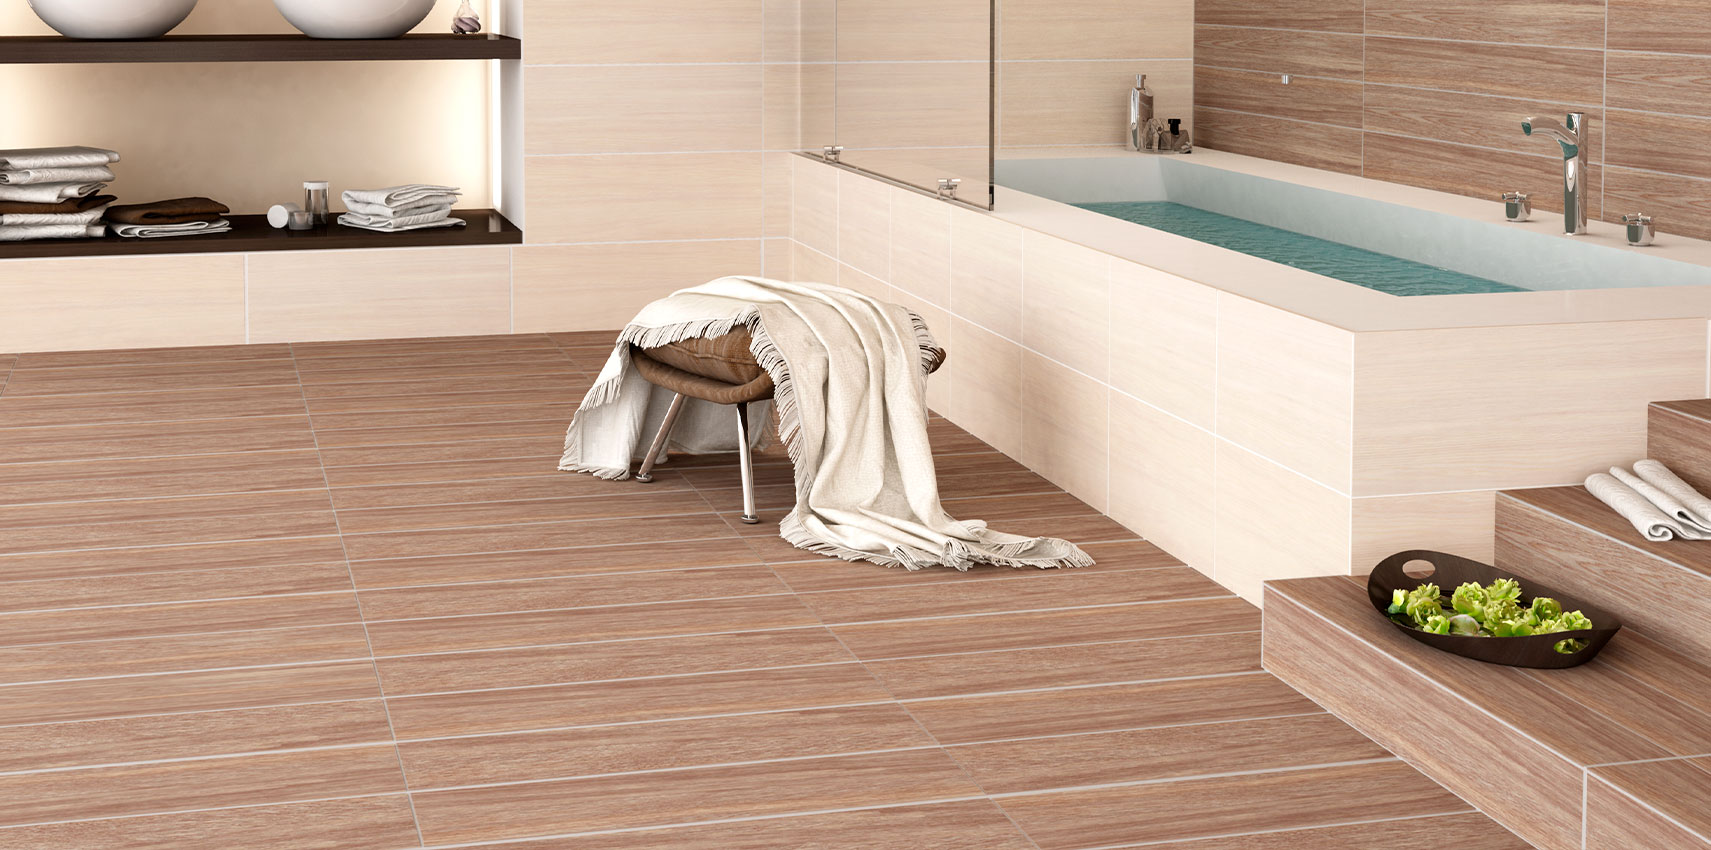 Bathroom Wall & Floor Tiles | Ceramia